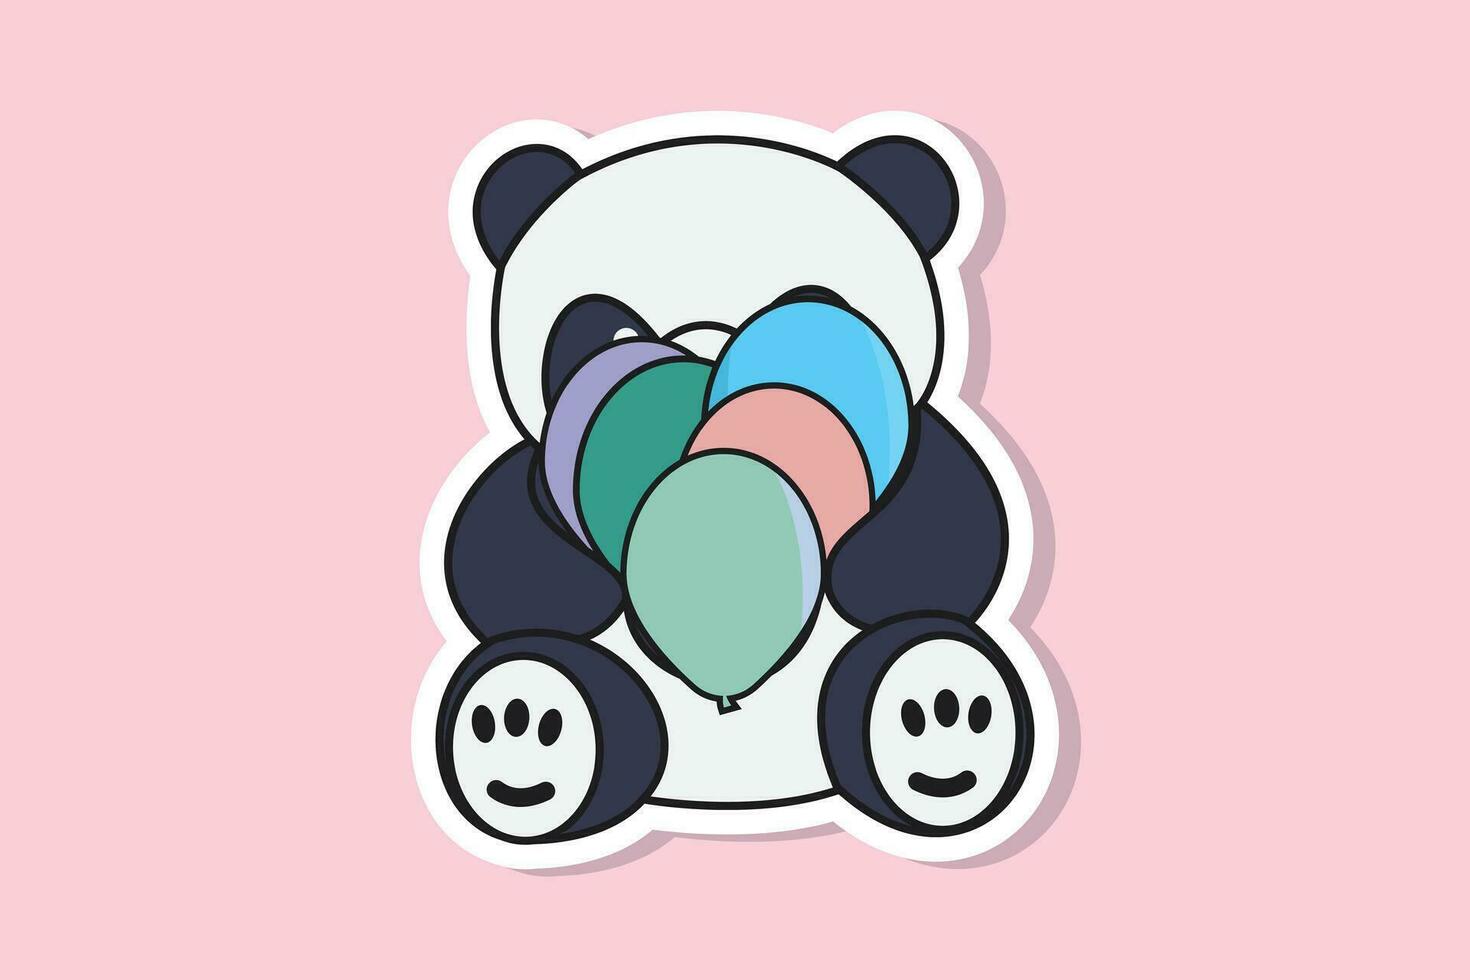 Cute Teddy Bear with Balloons sticker design vector illustration. Animal nature icon concept. Flat cartoon style icon design.